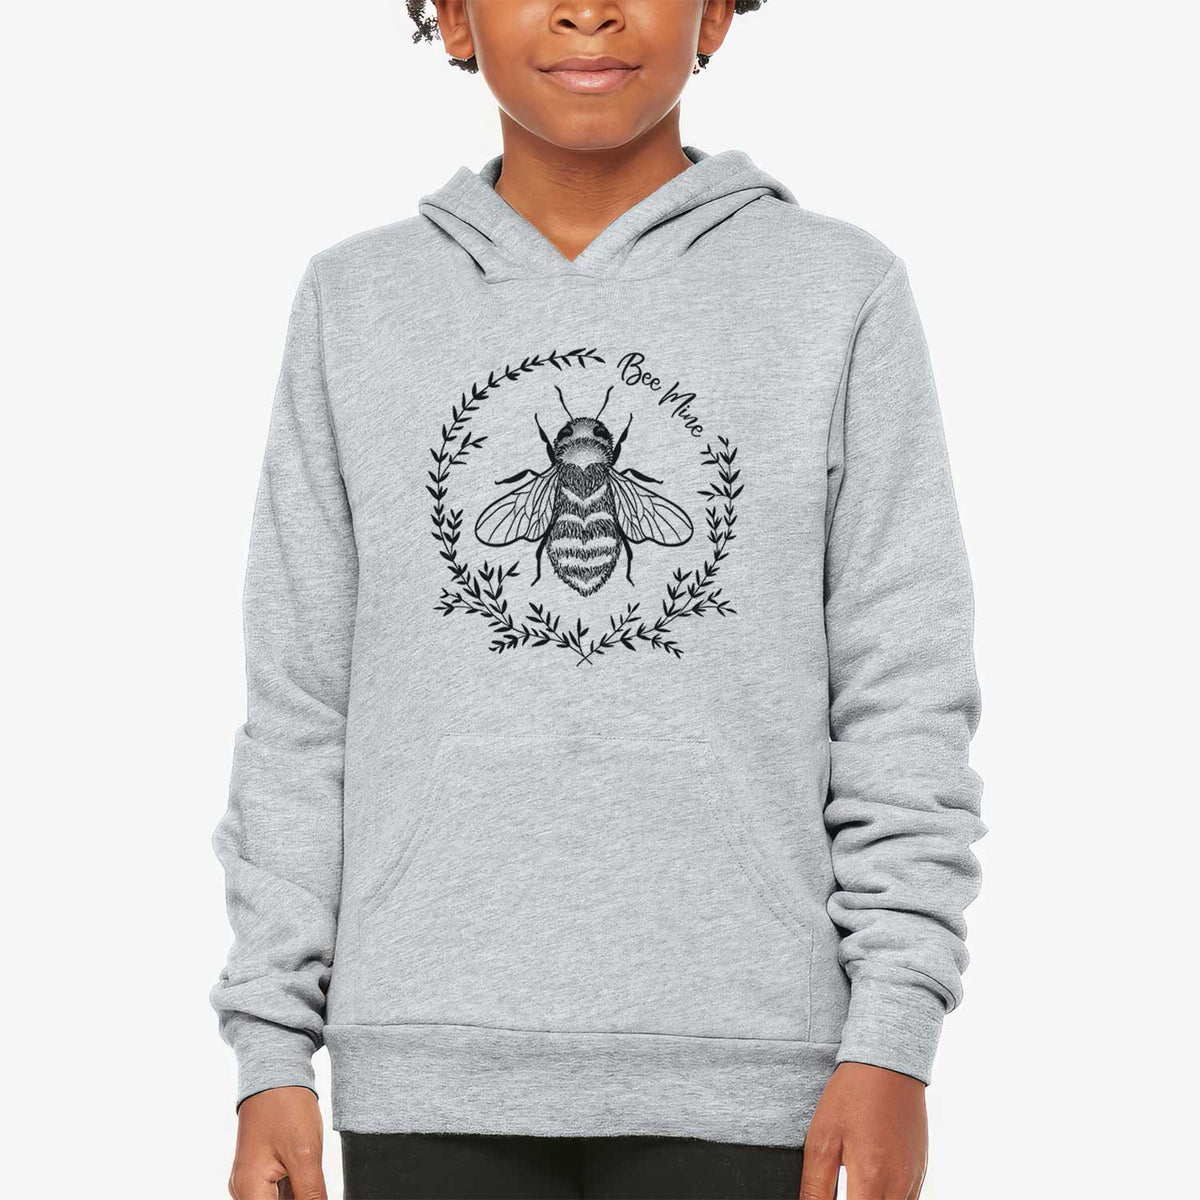 Bee Mine - Youth Hoodie Sweatshirt